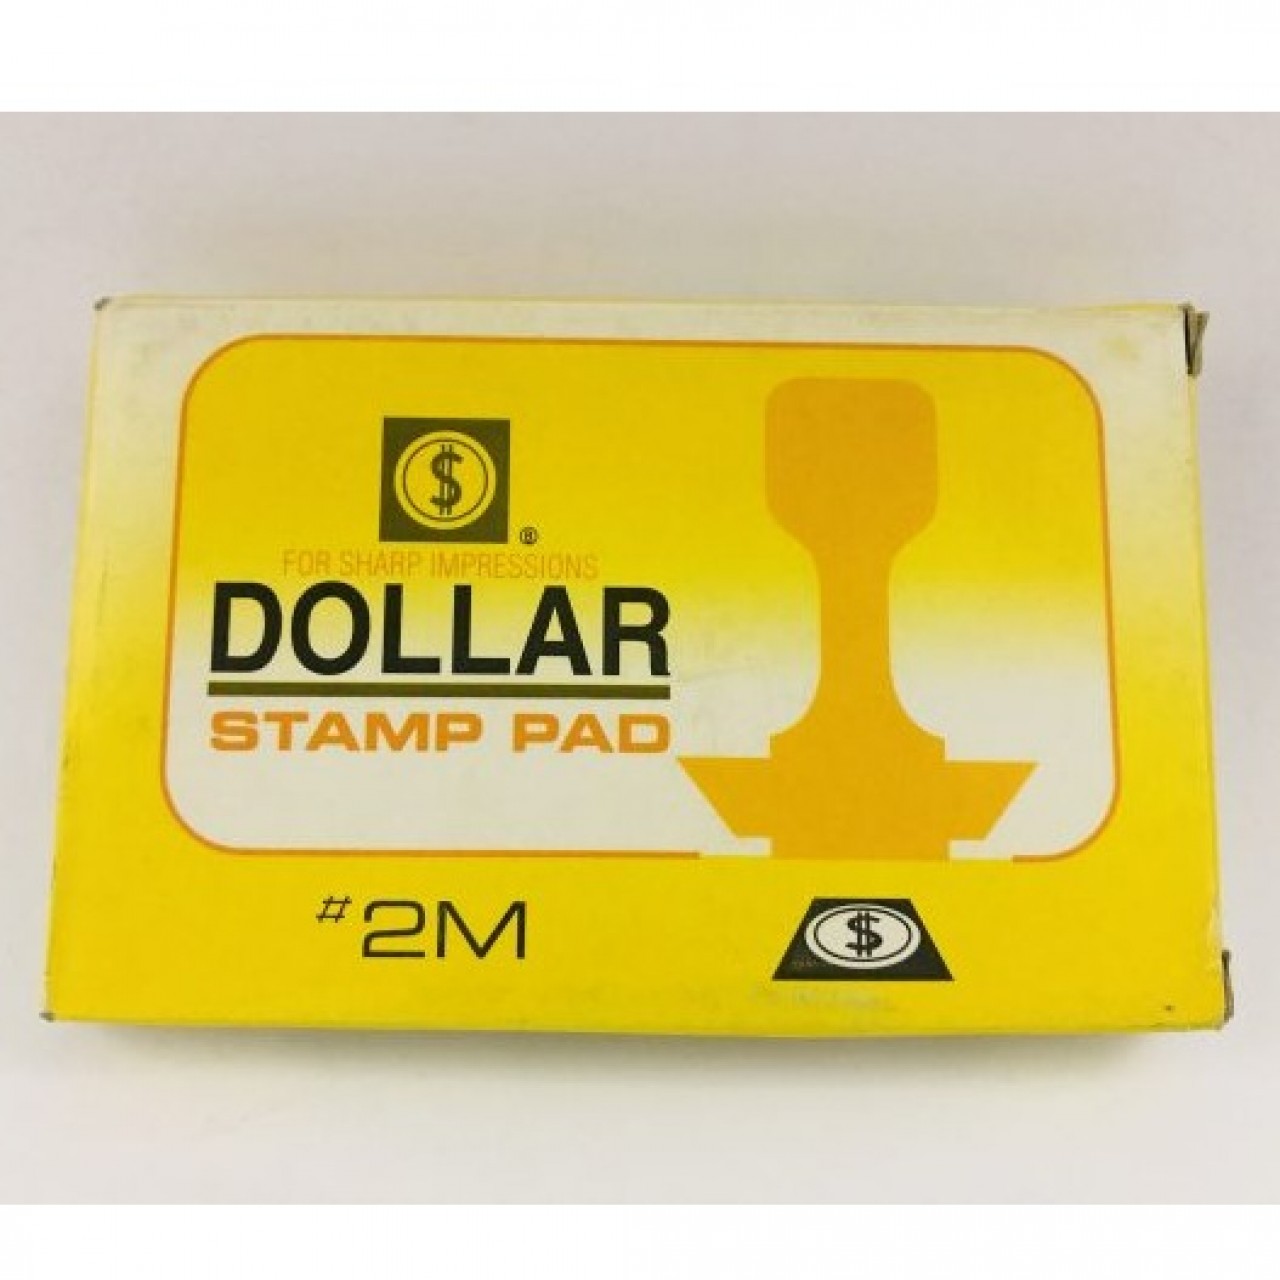 Dollar Stamp Pad 2M - 1 Piece - Black